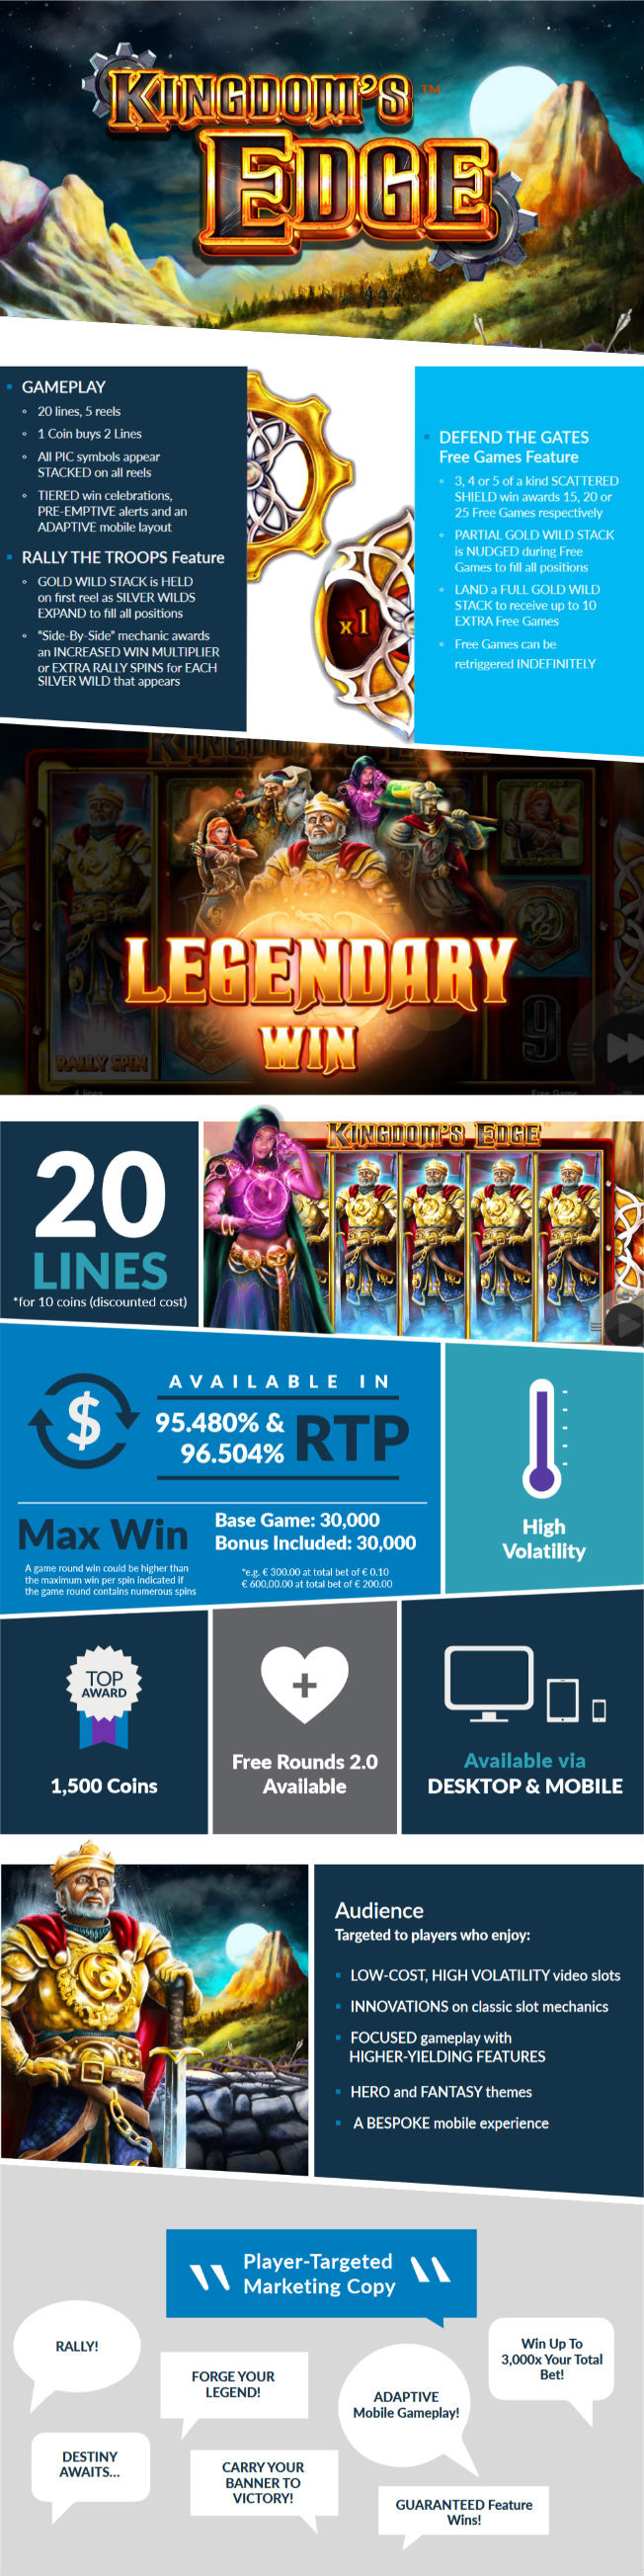 online slots casino Games software NextGen Gaming Game of Thrones Bonus spins gambling king